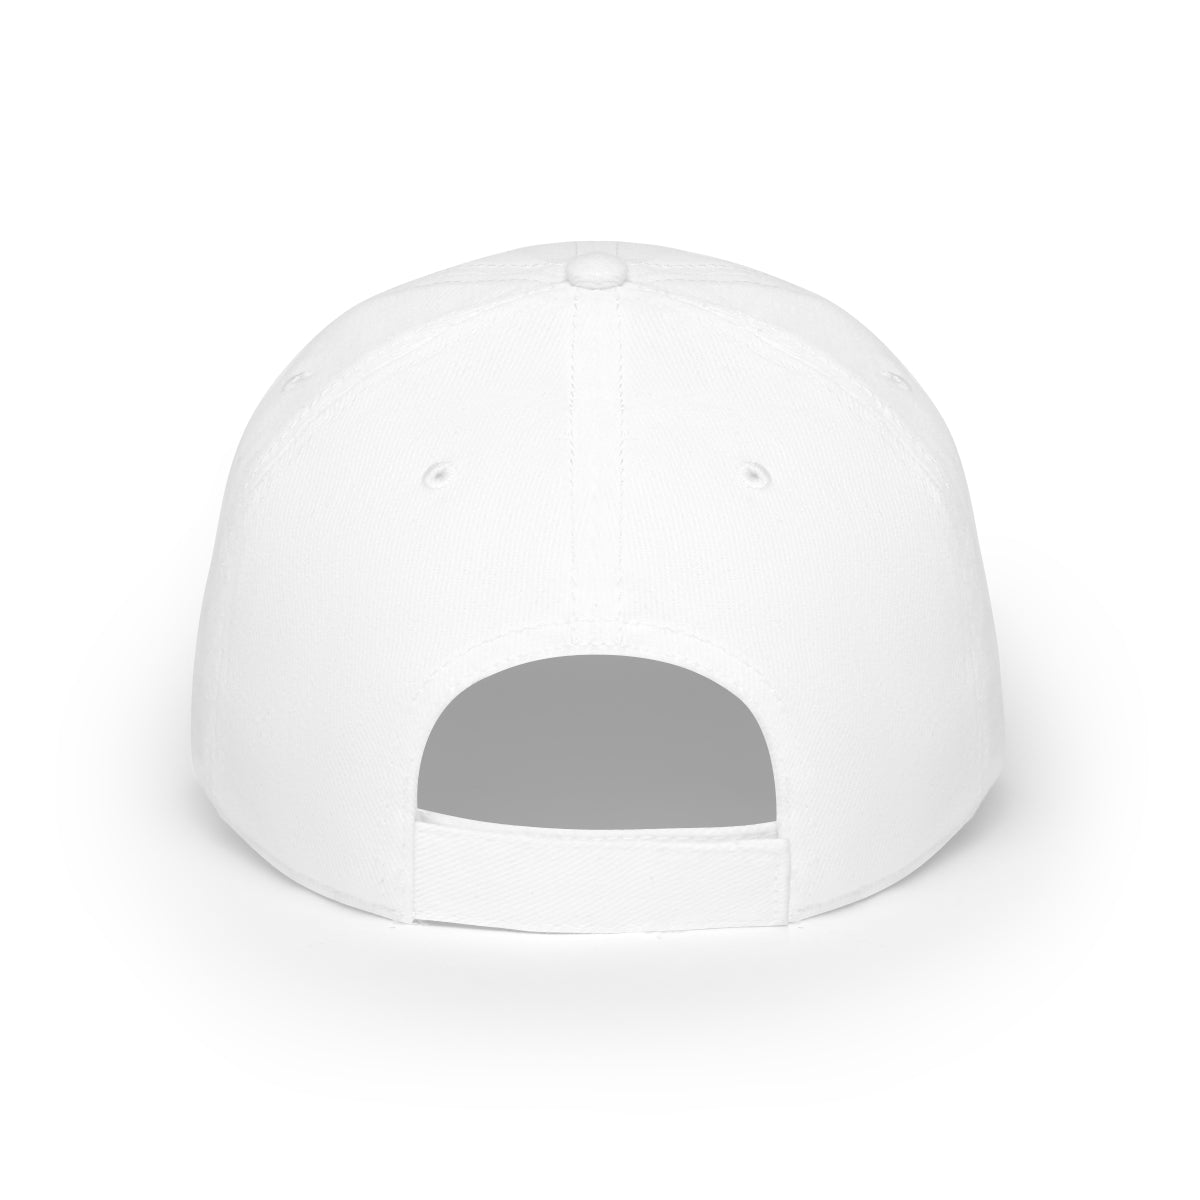 BIT WIT - Low Profile Baseball Cap